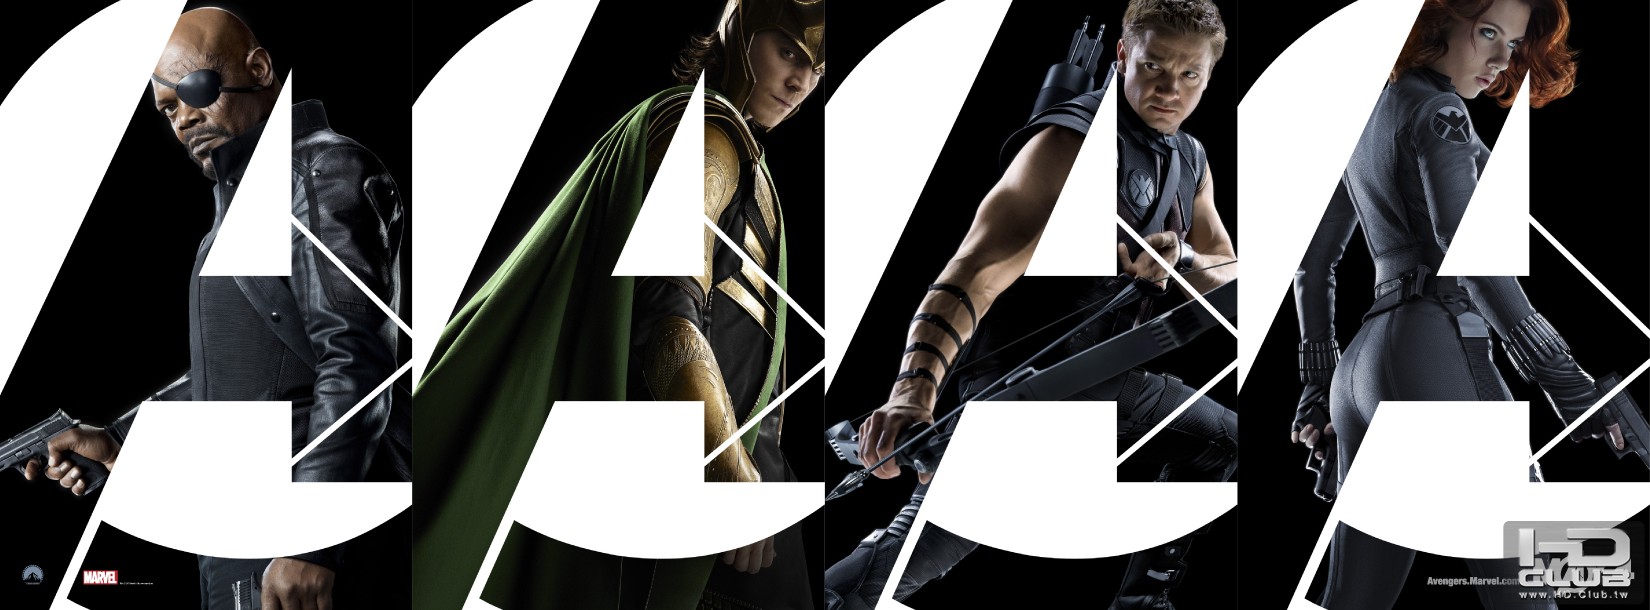 the-avengers-movie-poster-banner-02.jpeg